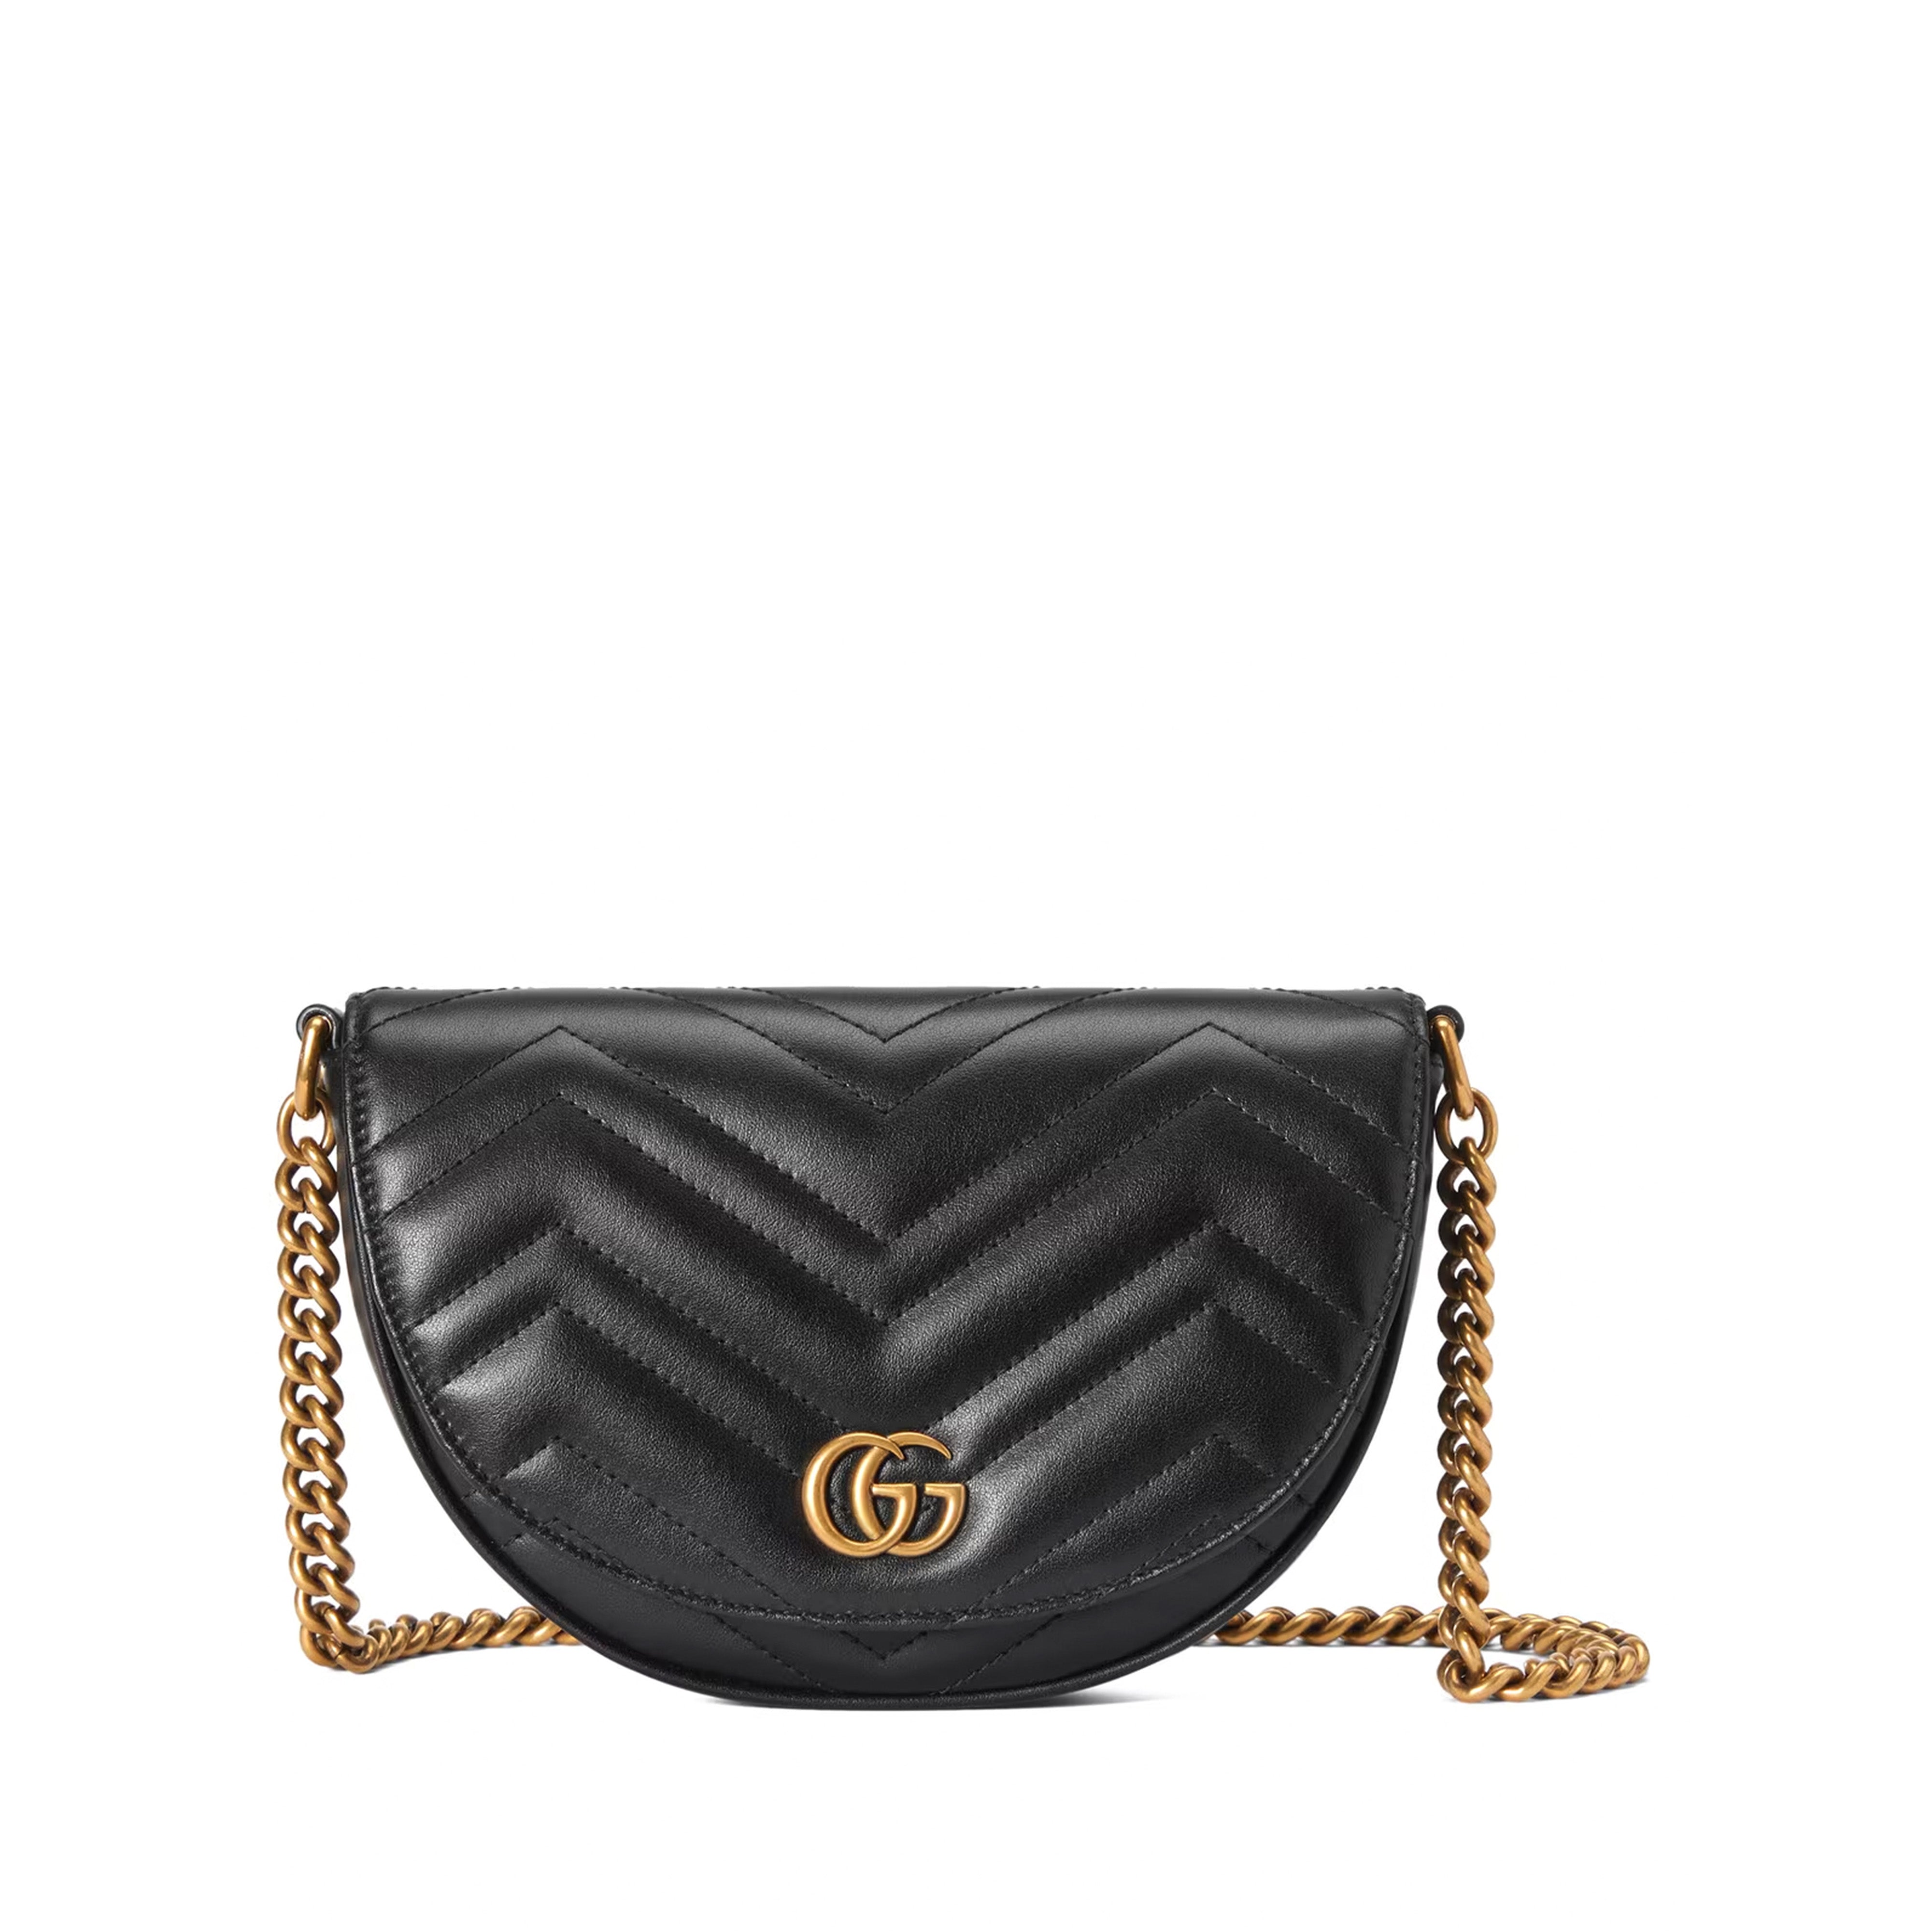 Gucci GG Marmont Mini Bag, Black, Leather